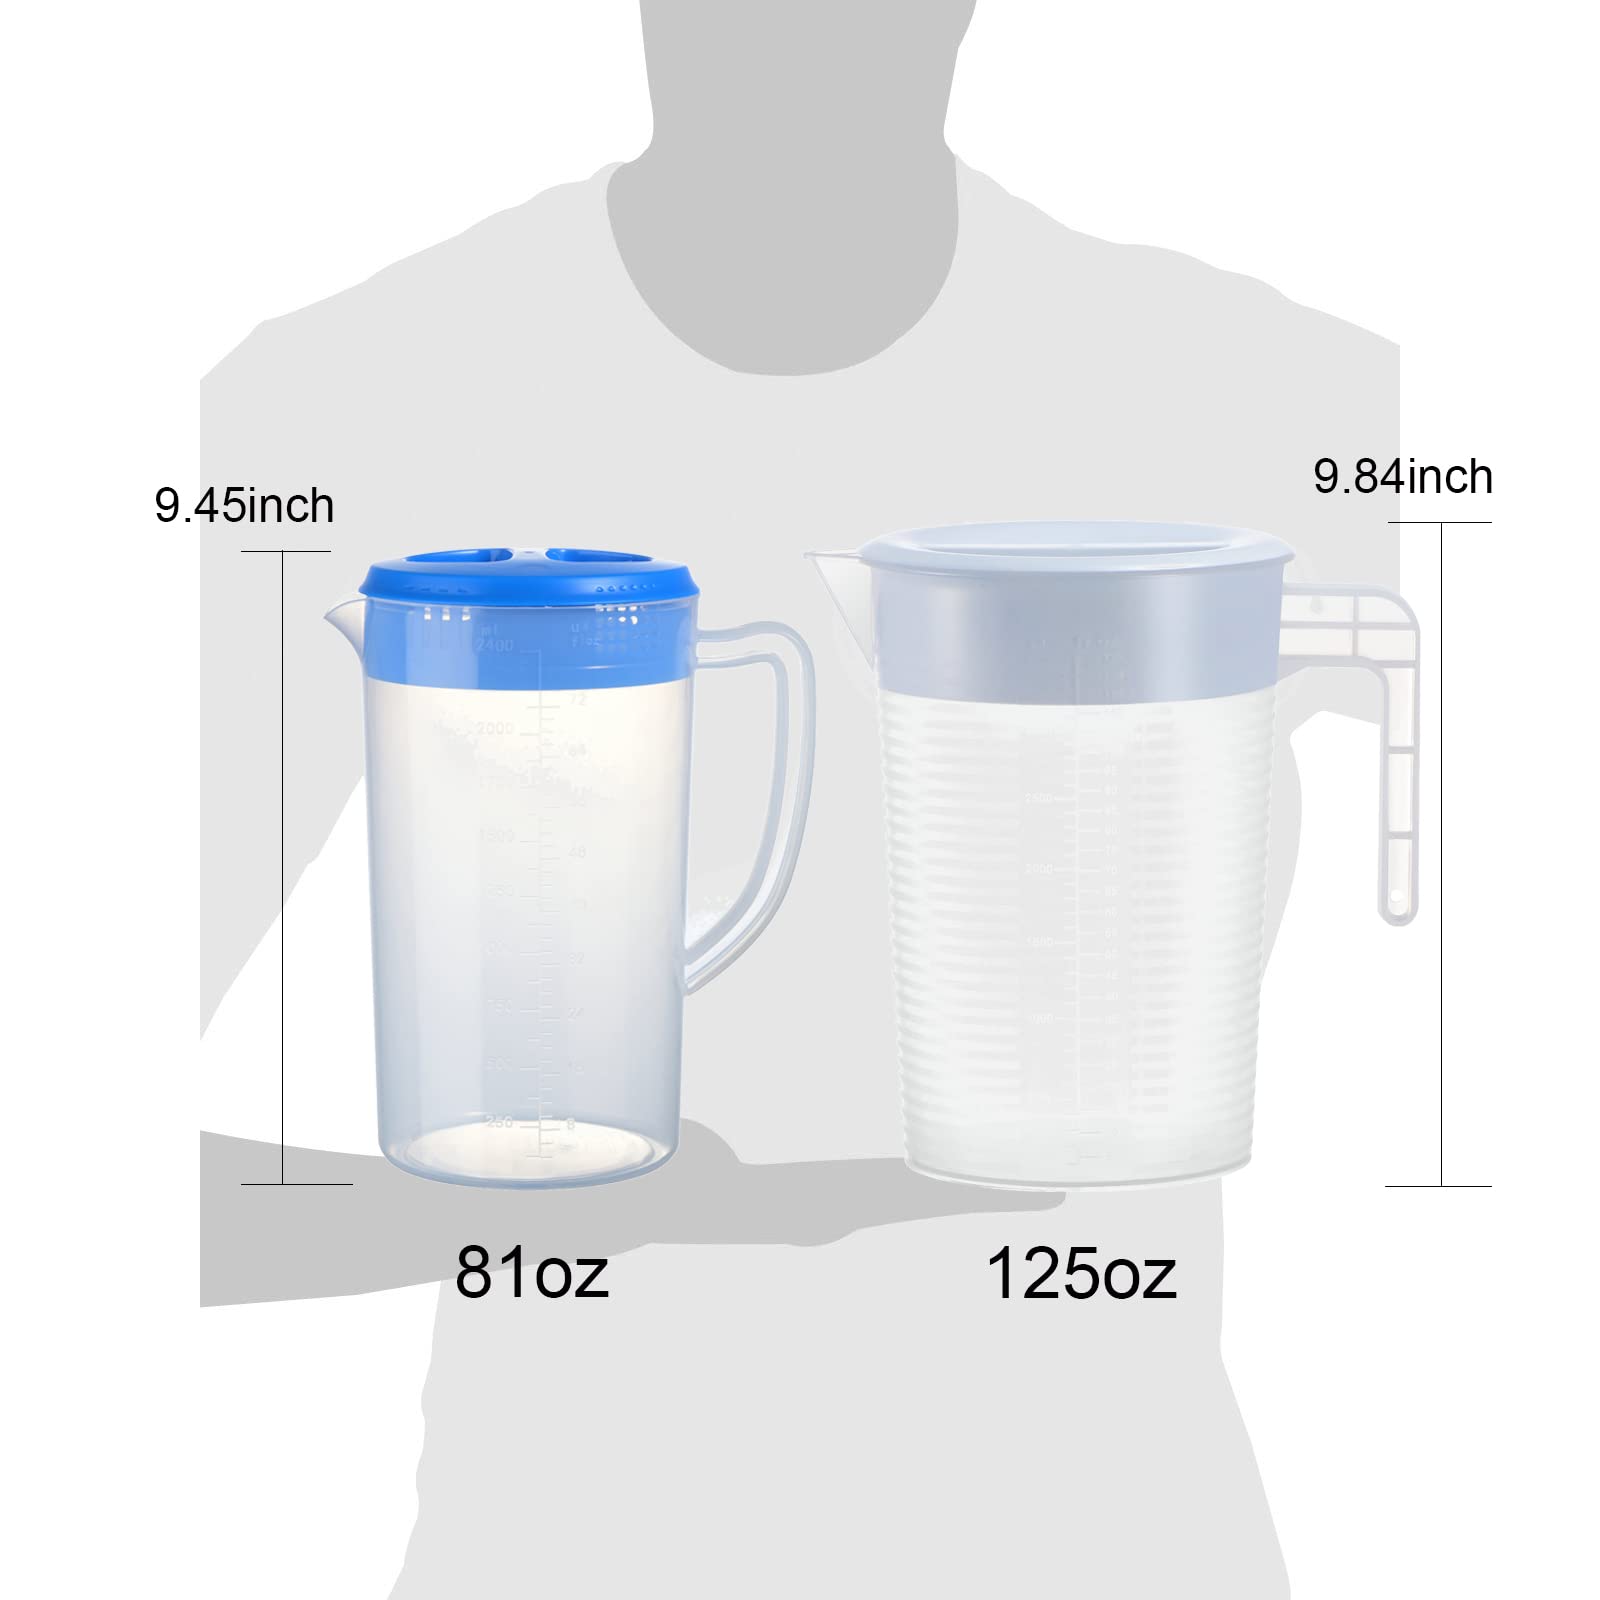 0.63 Gallon/2.4 Litre Plastic Pitcher with Lid BPA-FREE Eco-Friendly Carafes Mix Drinks Water Jug for Hot/Cold Lemonade Juice Beverage Jar Ice Tea Kettle (81oz, Blue)